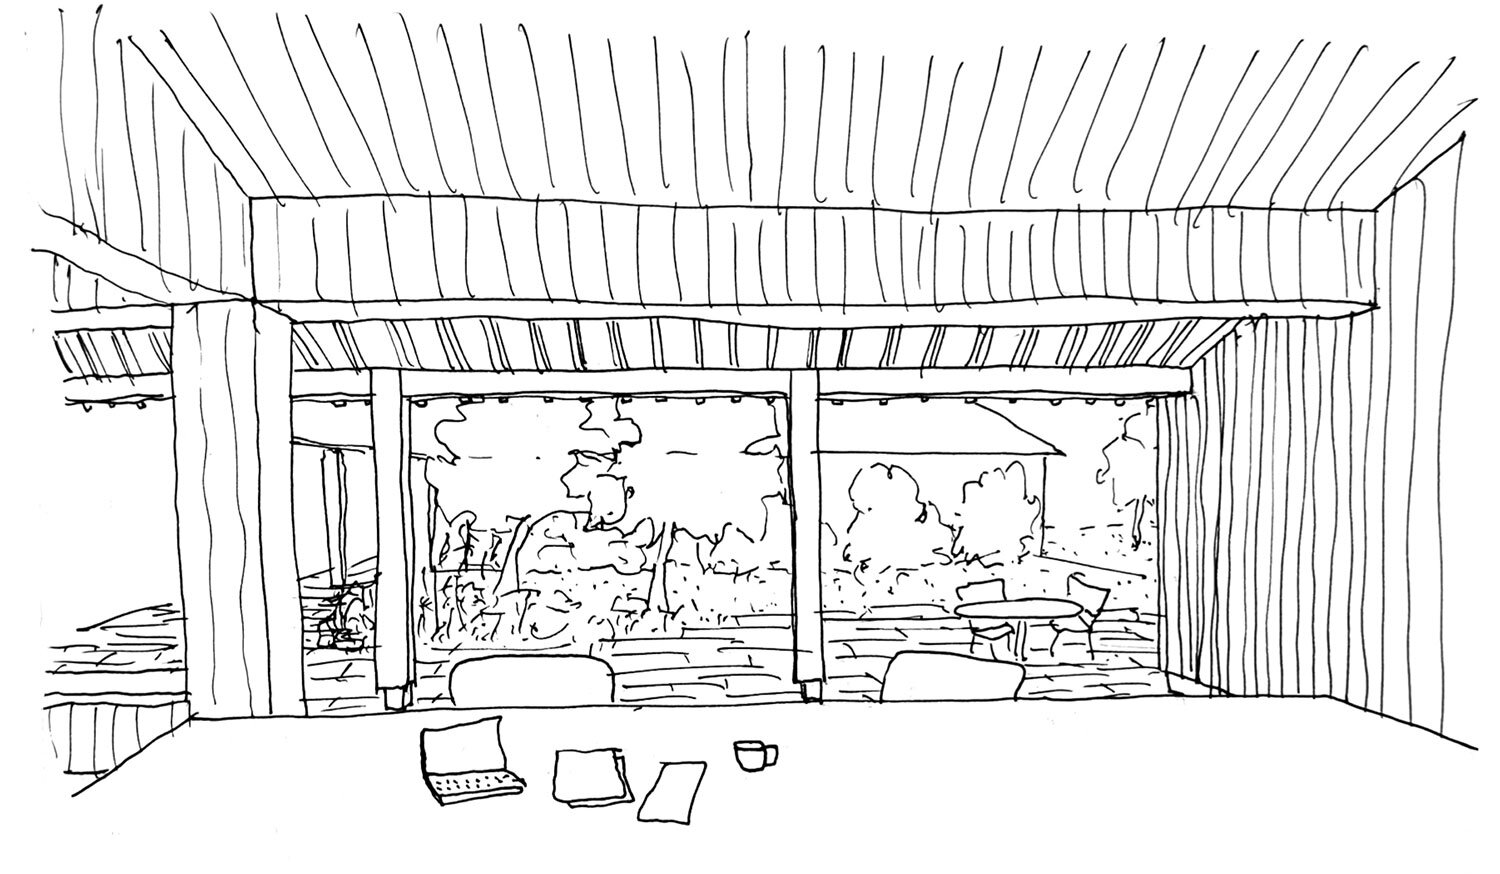 Frome-somerset-passivhaus-prewett-bizley-architects-vernada-sketch.jpg